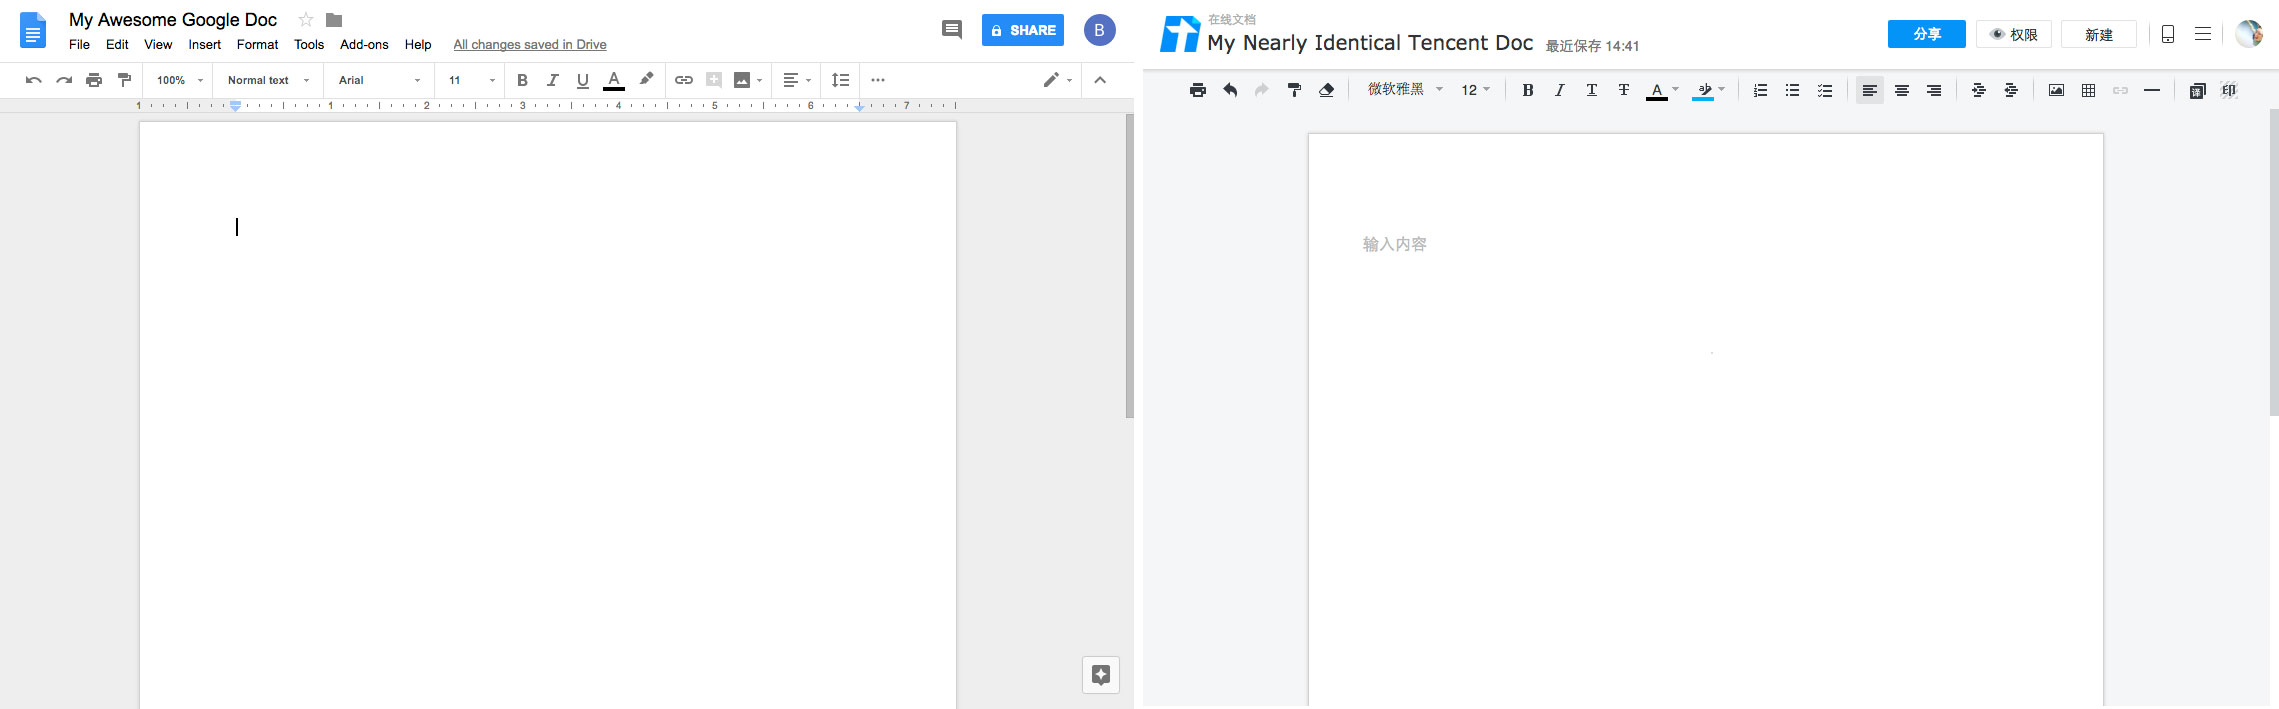 Google Doc vs. Tencent Doc